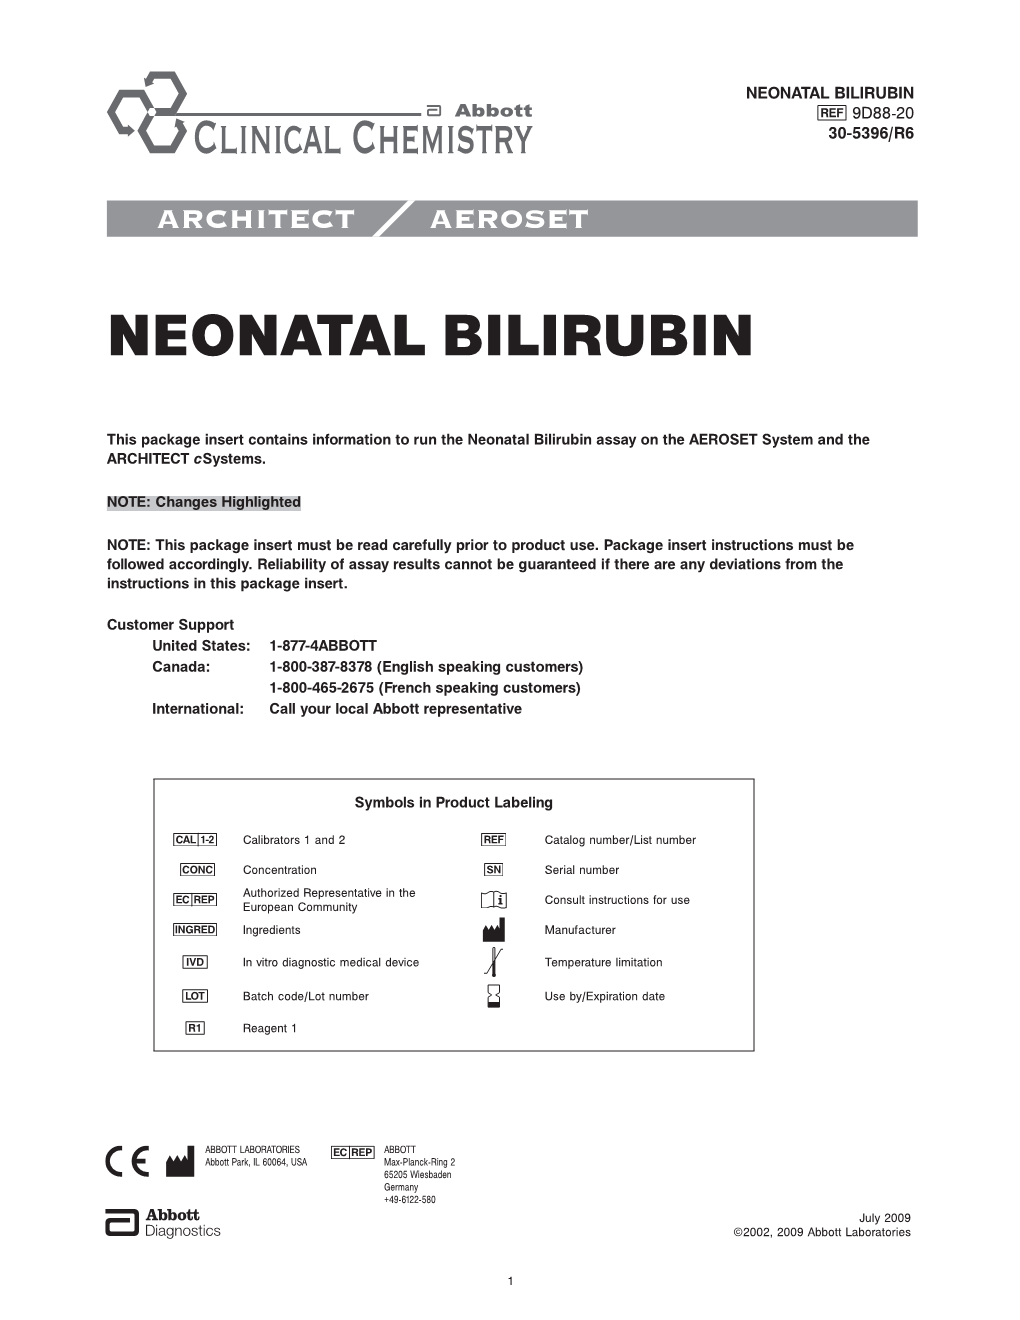 Neonatal Bilirubin 9D88-20 30-5396/R6